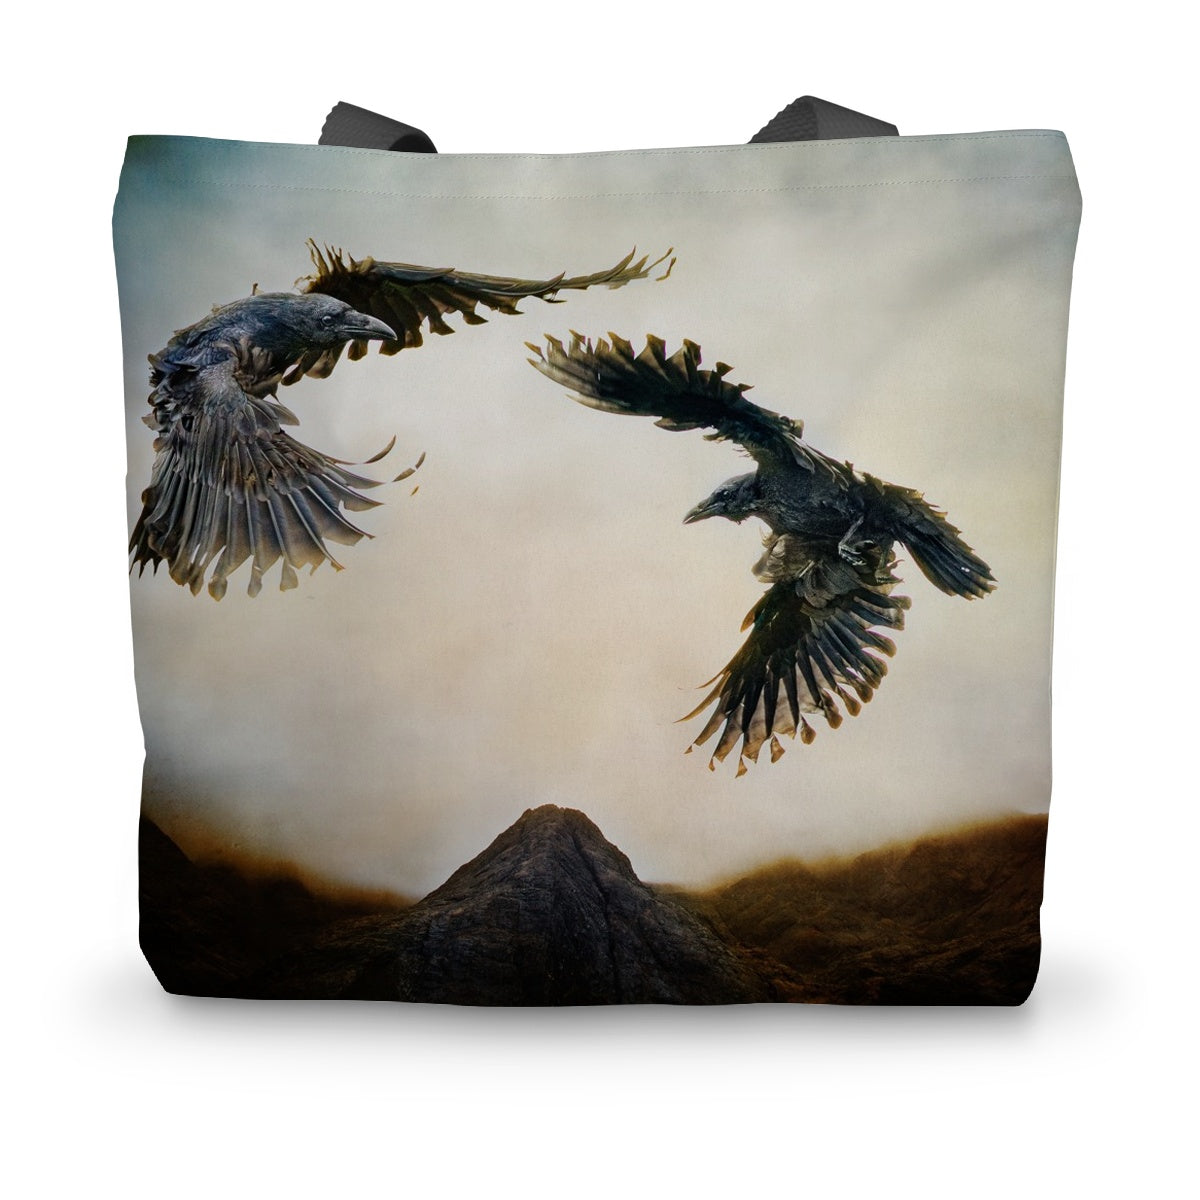 Odin's Ravens Canvas Tote Bag